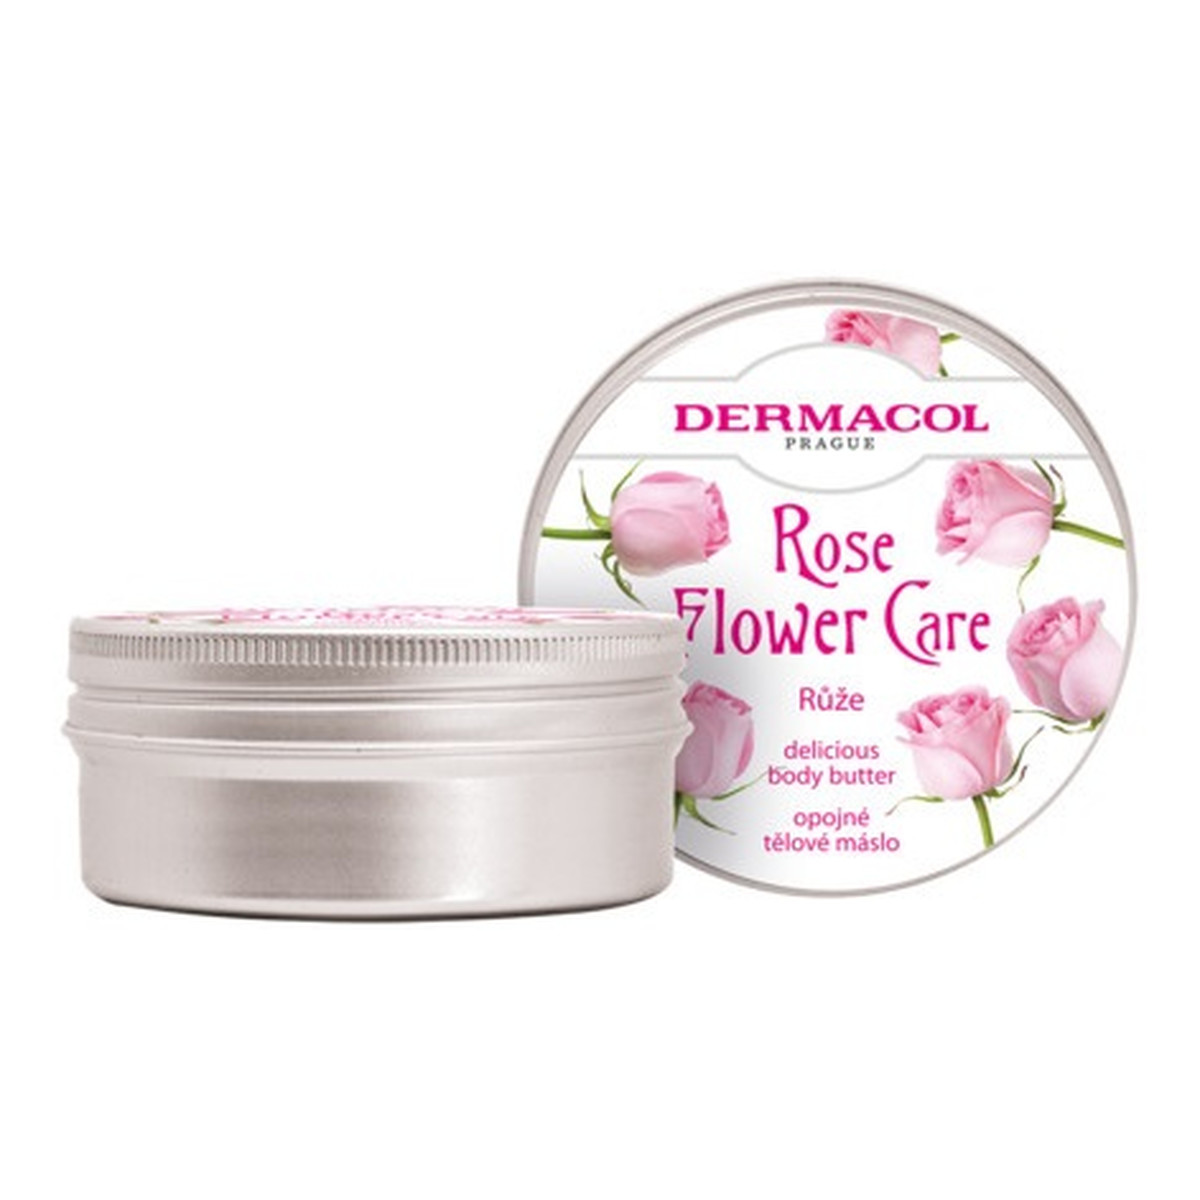 Dermacol Flower care delicious body butter masło do ciała rose 75ml